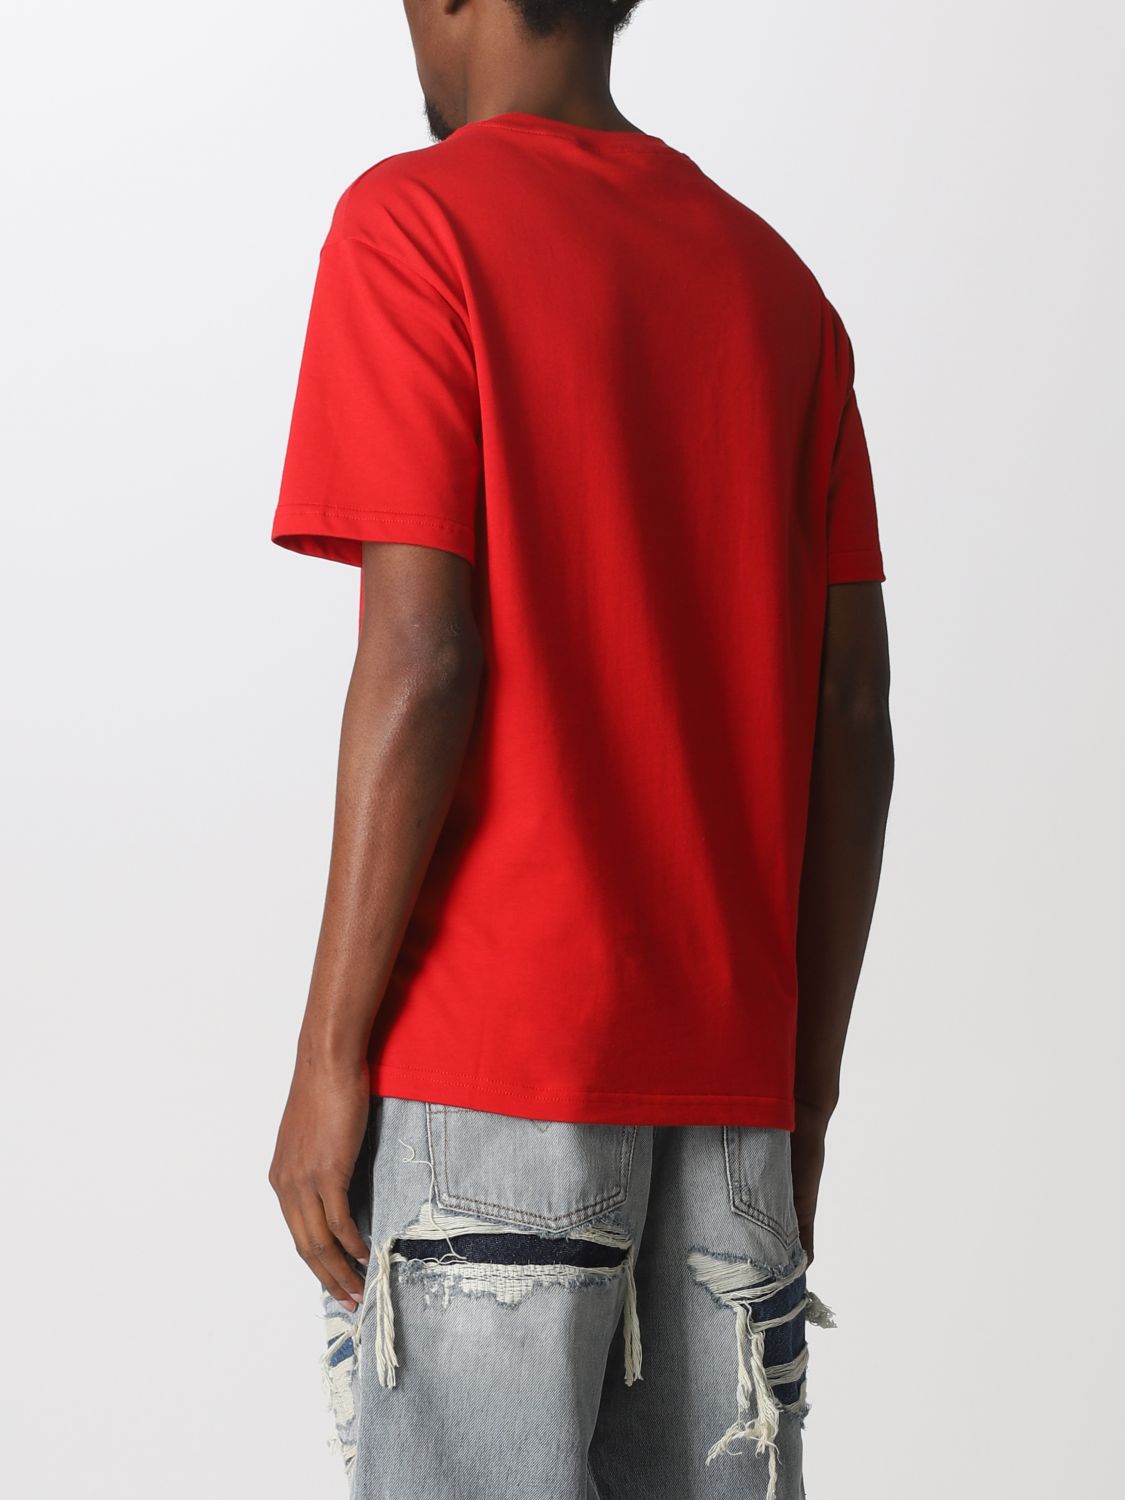 ROBE DI KAPPA: t-shirt for men - Red | Robe Di Kappa t-shirt 65111LW ...